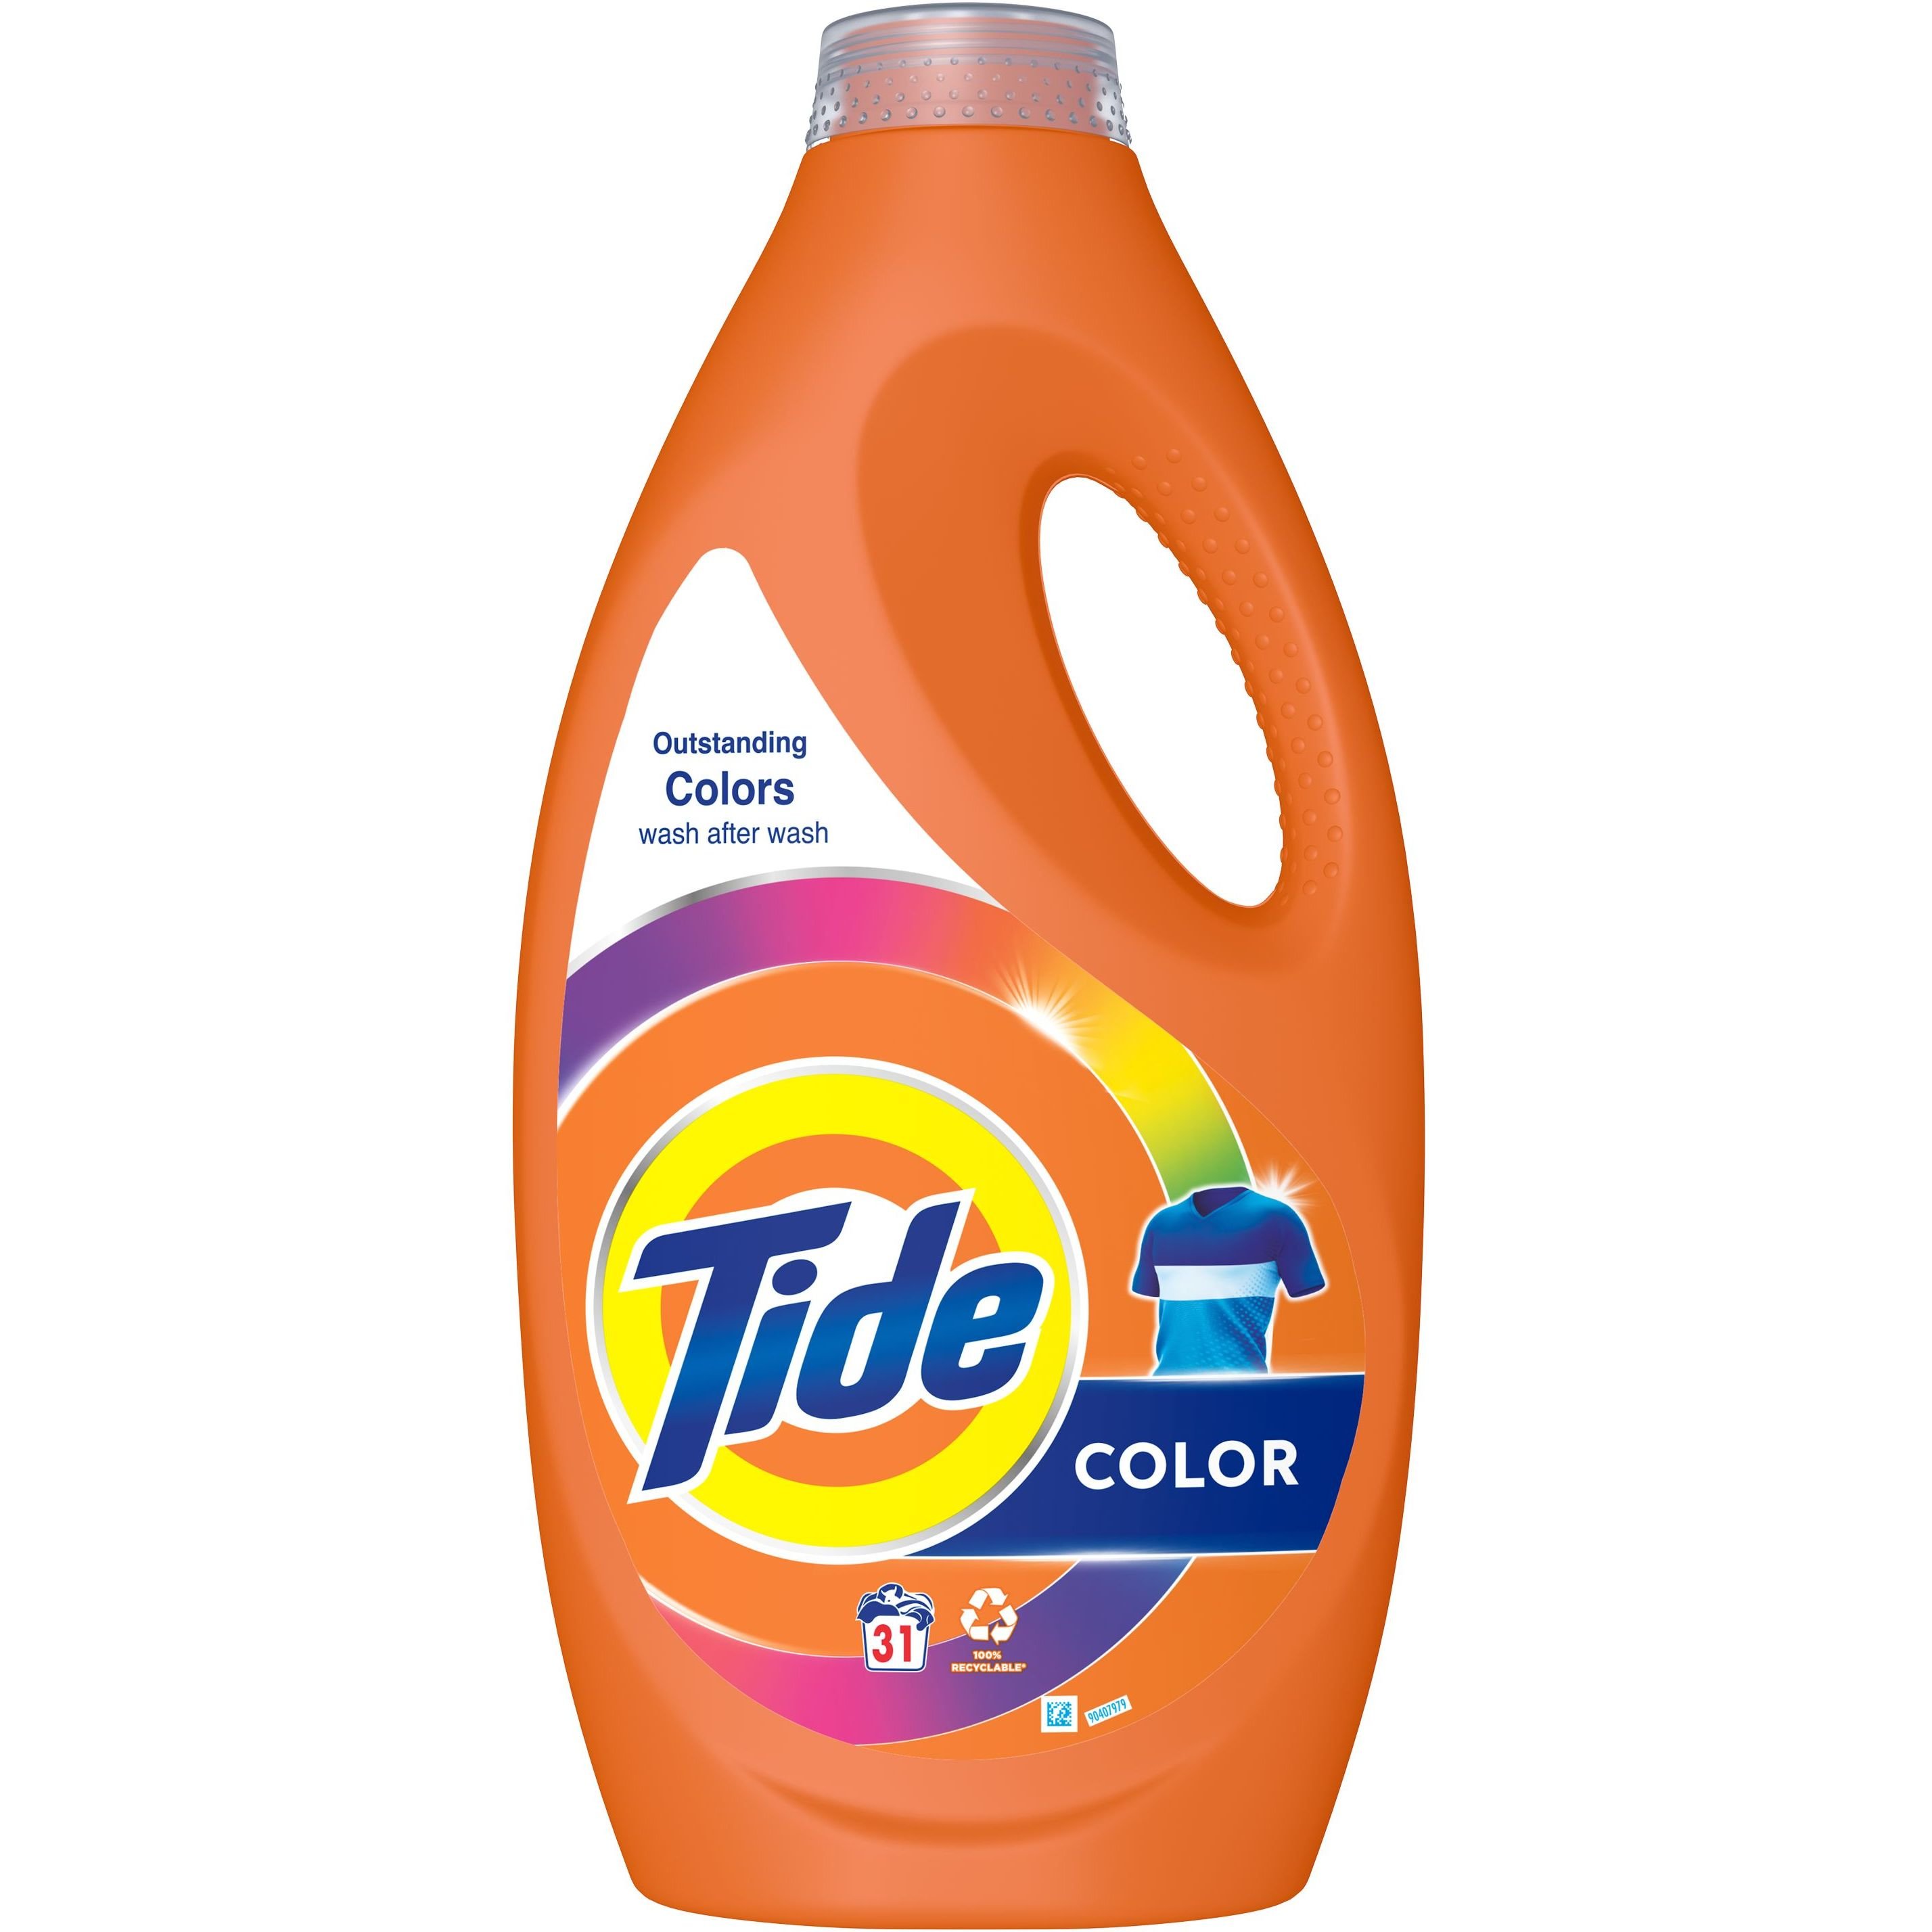 Гель для прання Tide Color, 1,55 л - фото 2